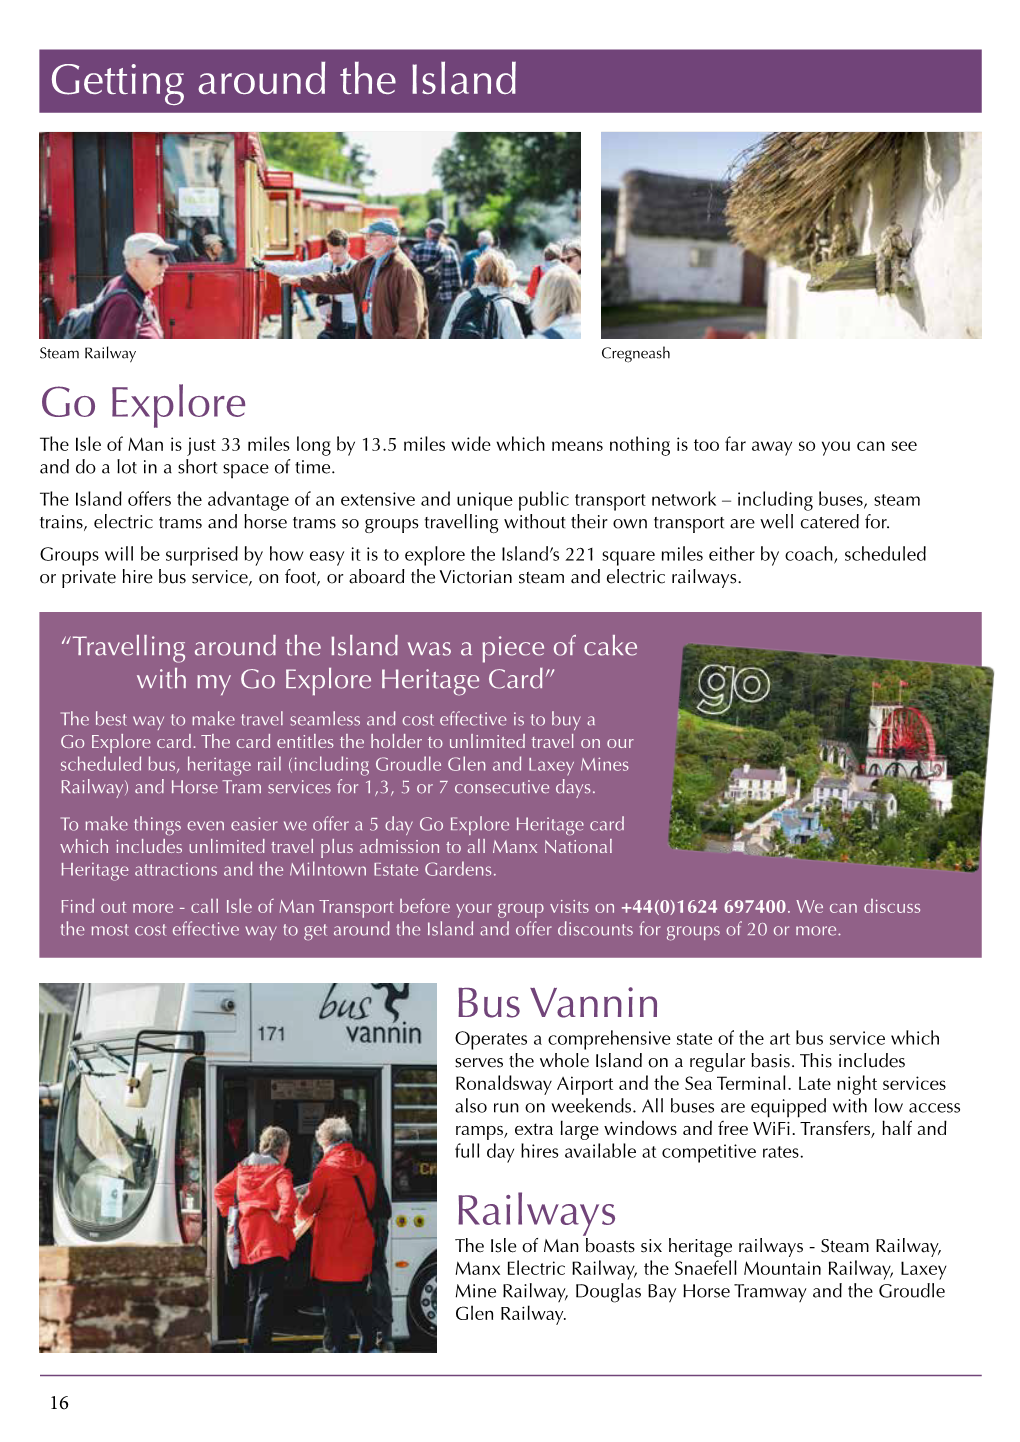 Go Explore Getting Around the Island Bus Vannin Railways